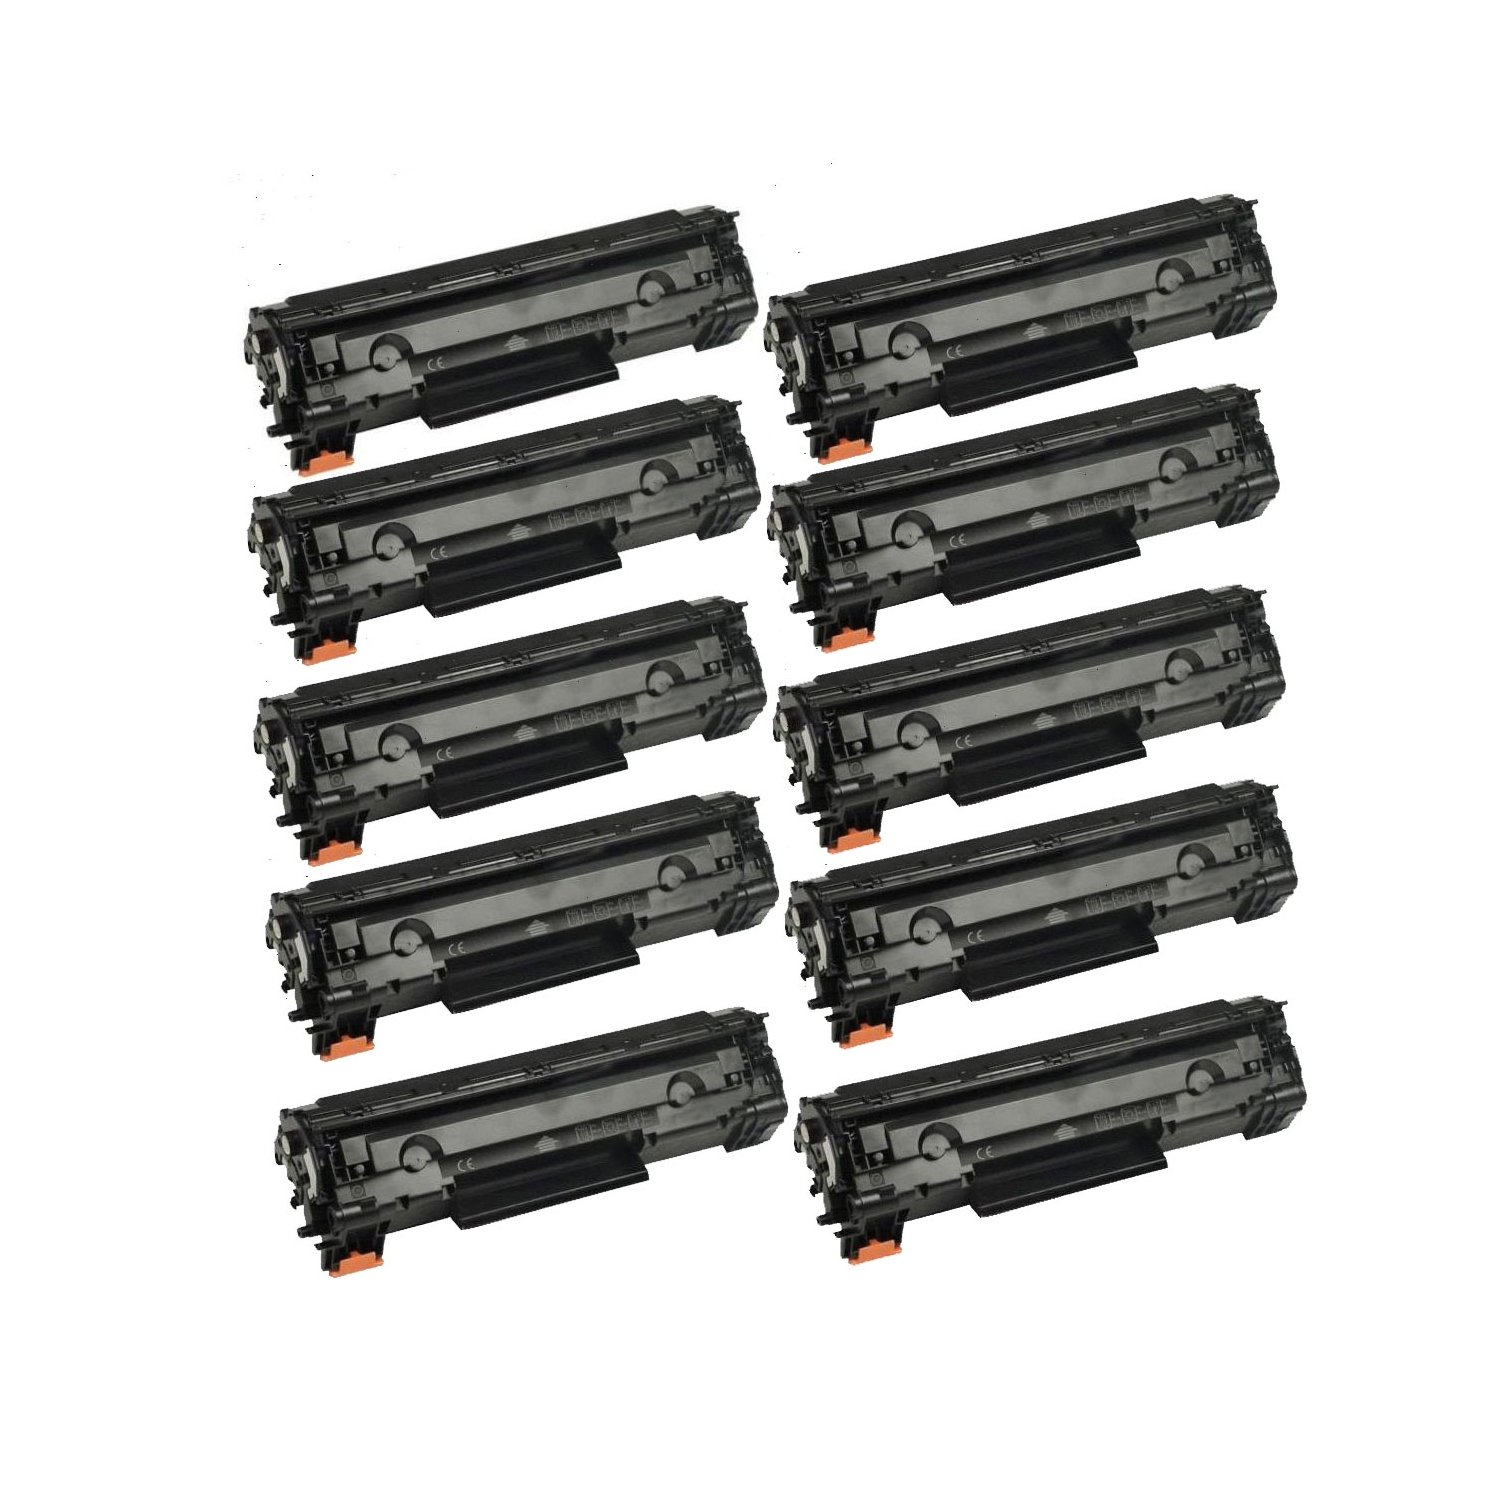 10Pack CF279A Toner Cartridges Compatible for HP 79A (79A) LaserJet Pro MFP M26a MFP M26nw M12a M12w